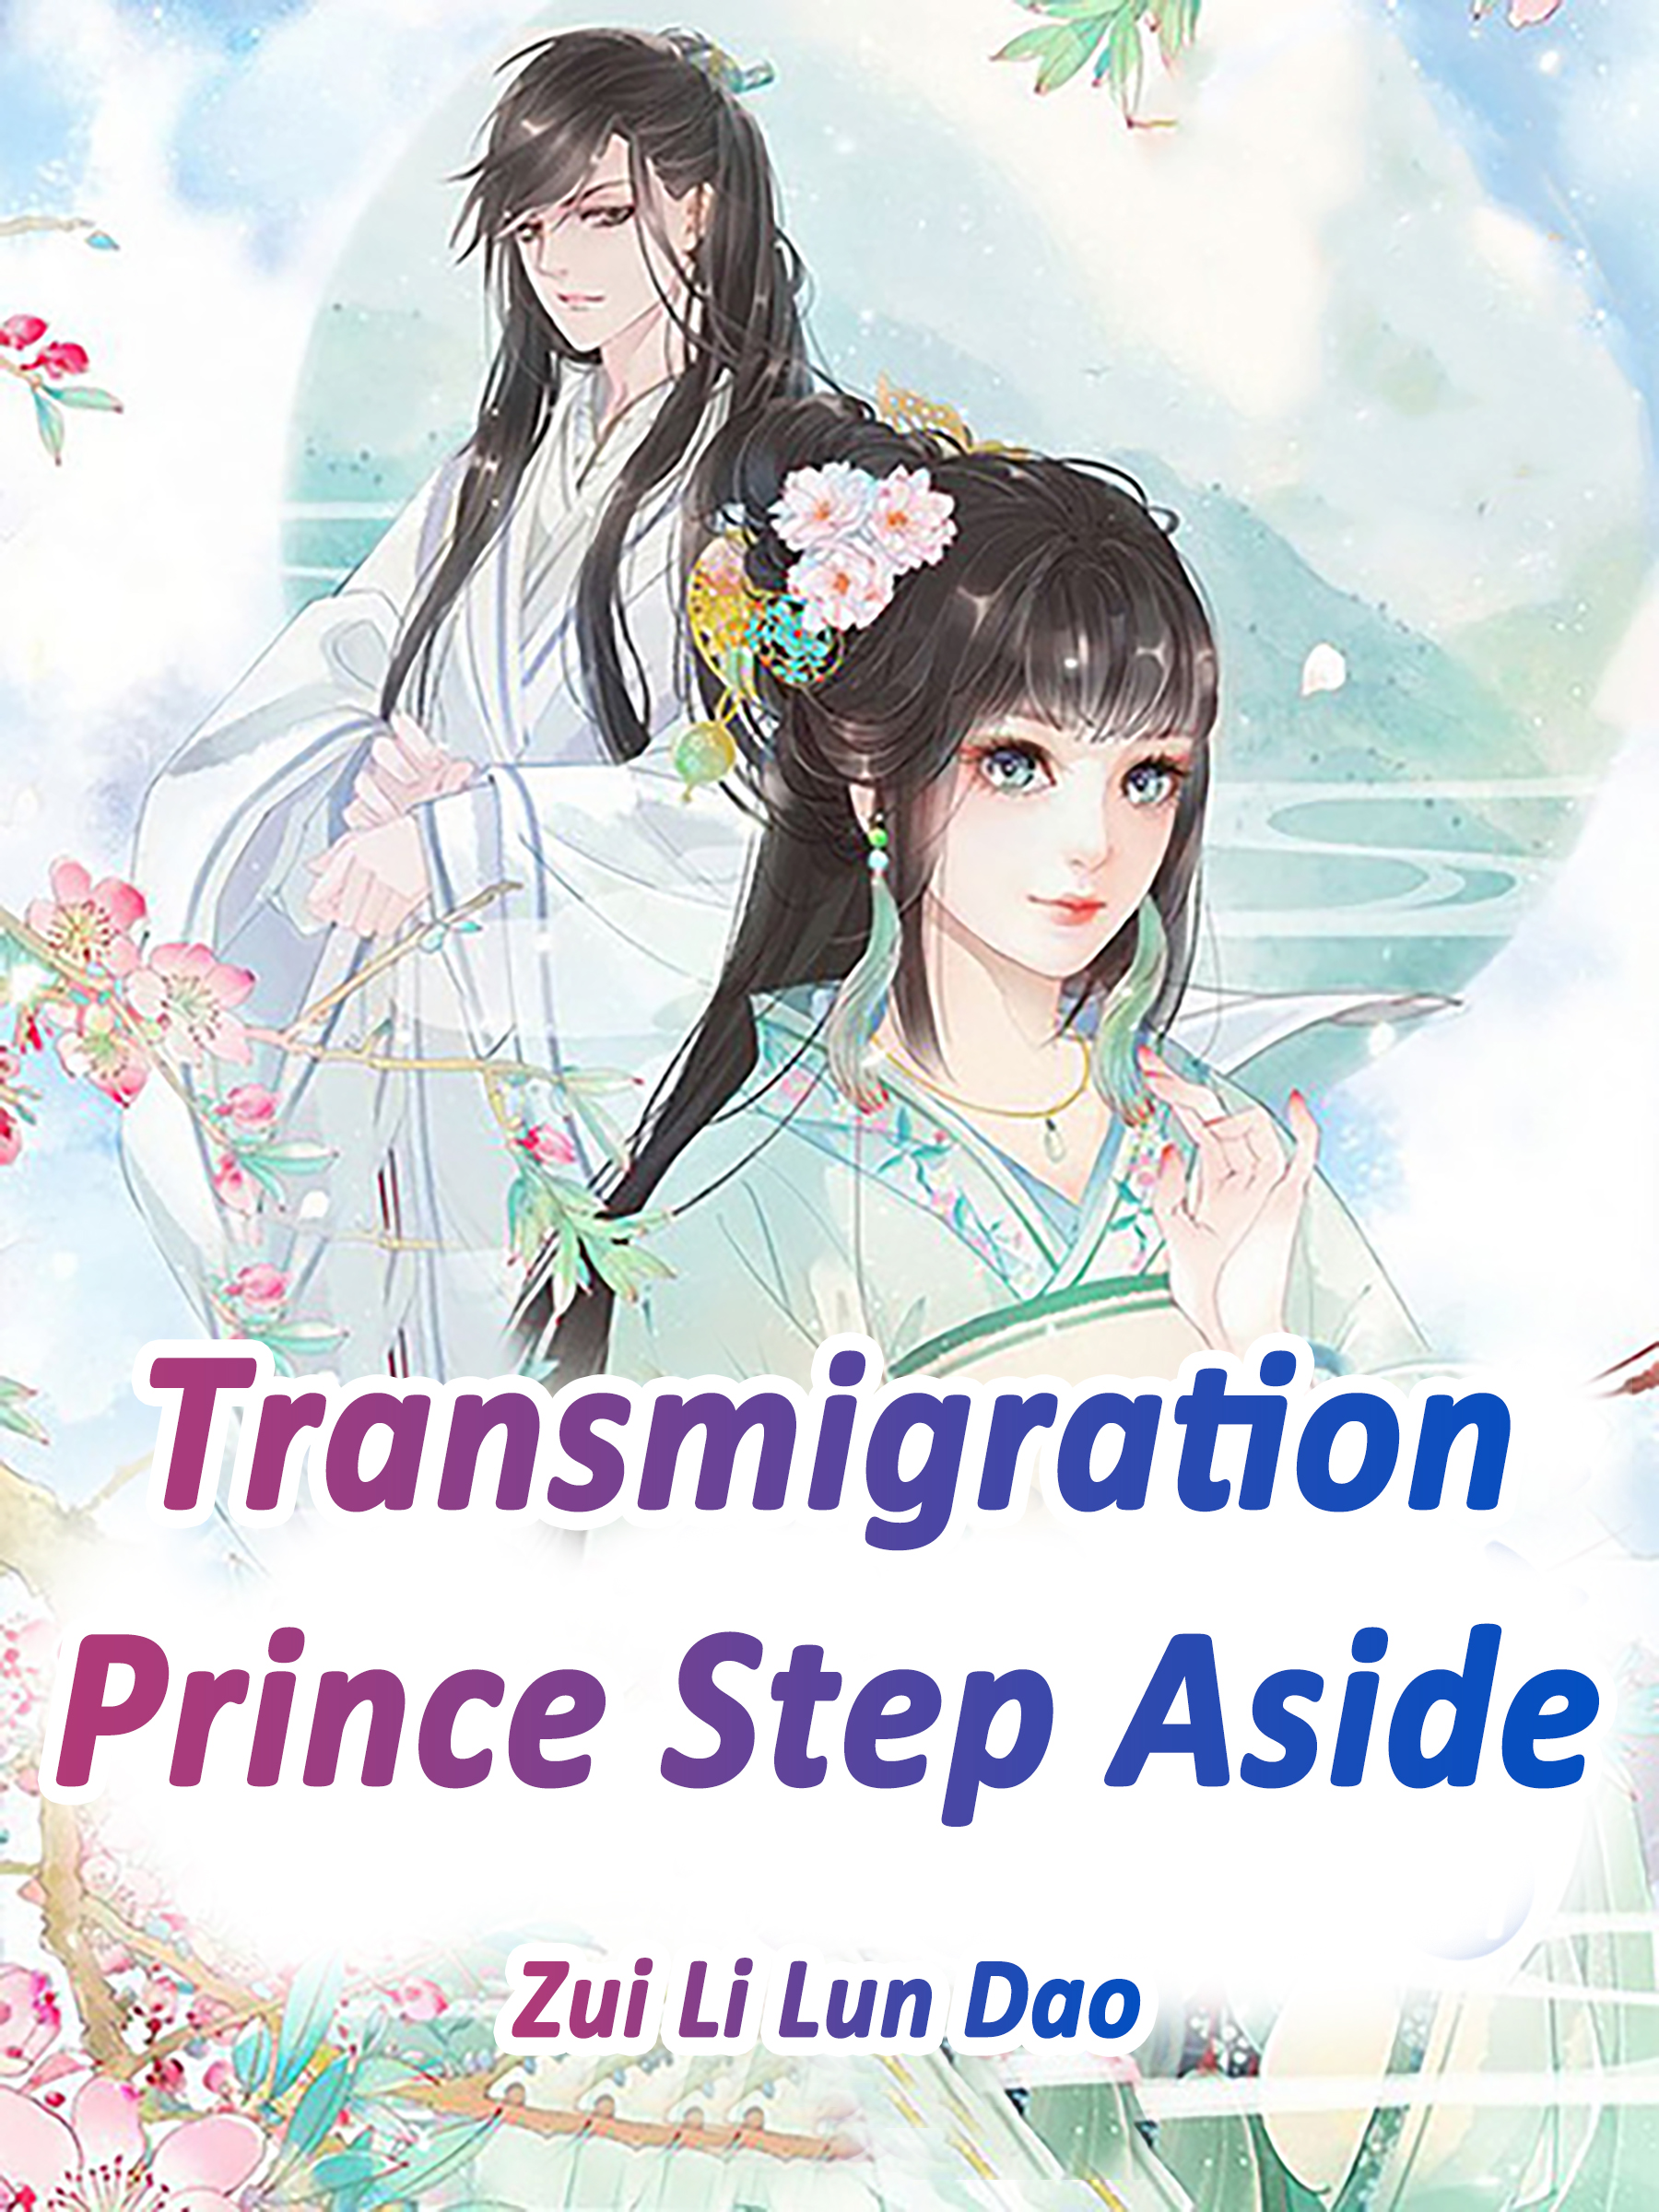 Transmigration: Prince, Step Aside Novel Full Book - BabelNovel